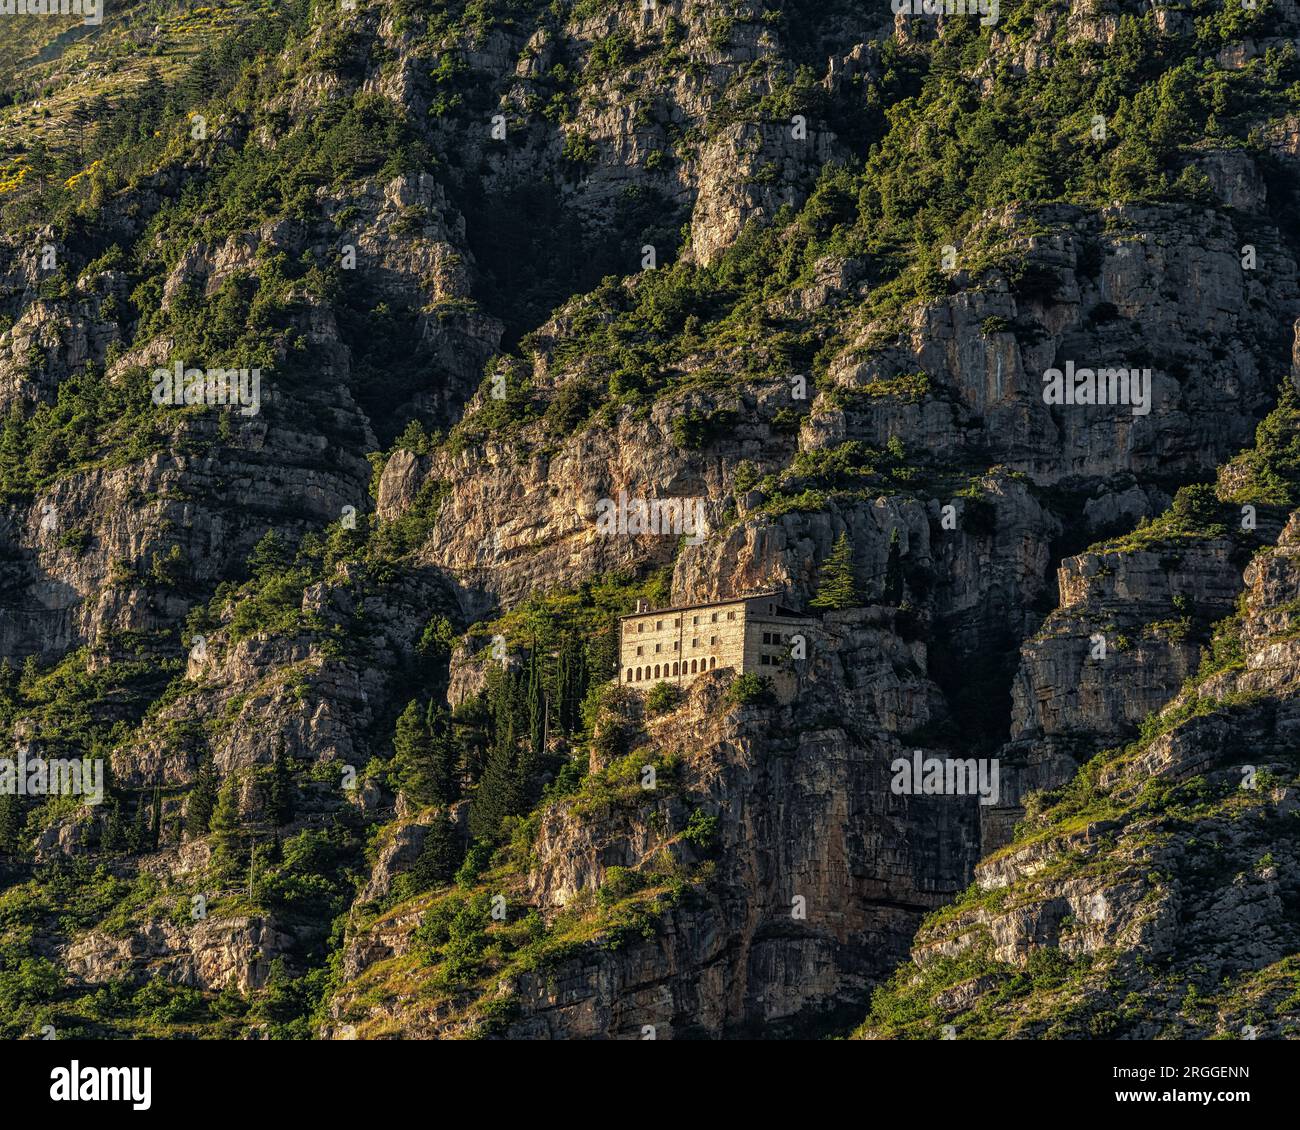 Panorama de las laderas del Monte Morrone y la Ermita de Sant' Onofrio fundada por el Papa Celestino V. Sulmona, provincia de L'Aquila, Abruzzo, Italia, Foto de stock